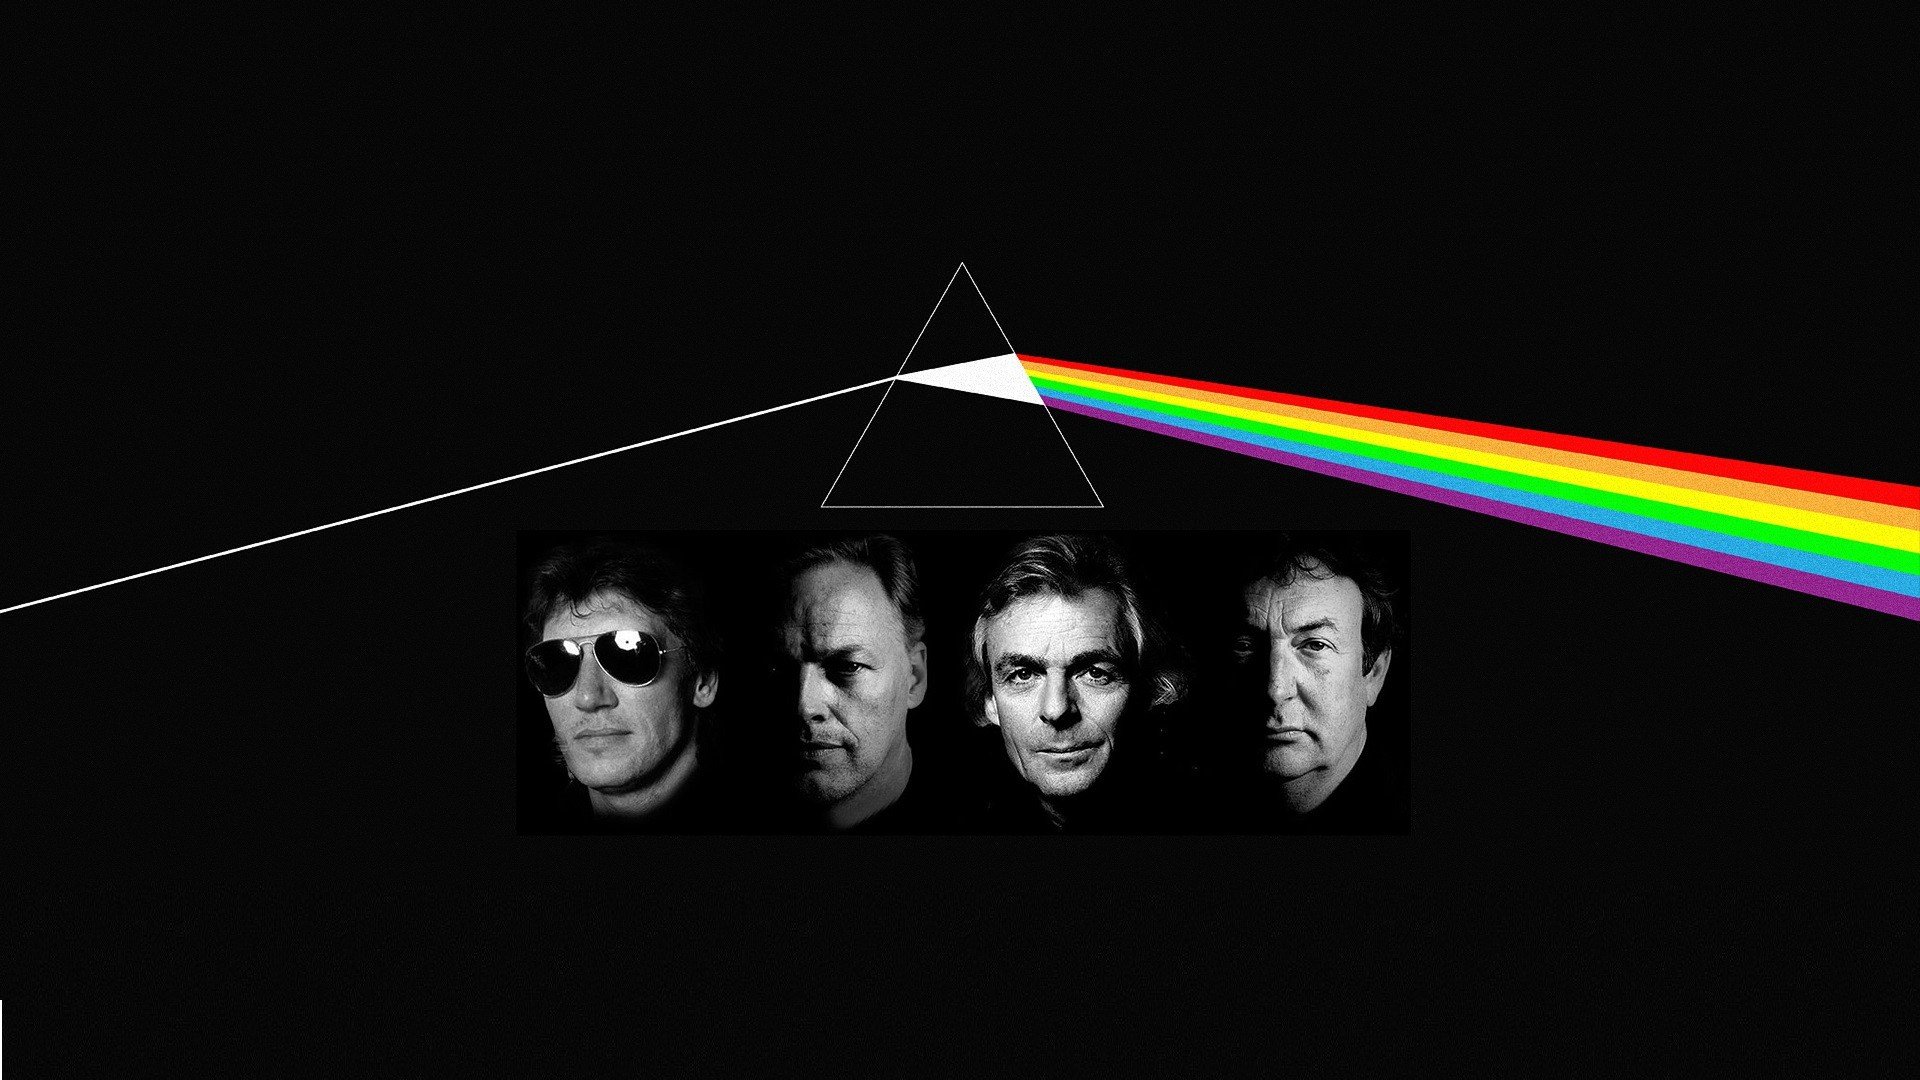 Pink Floyd Wallpaper 1920x1080